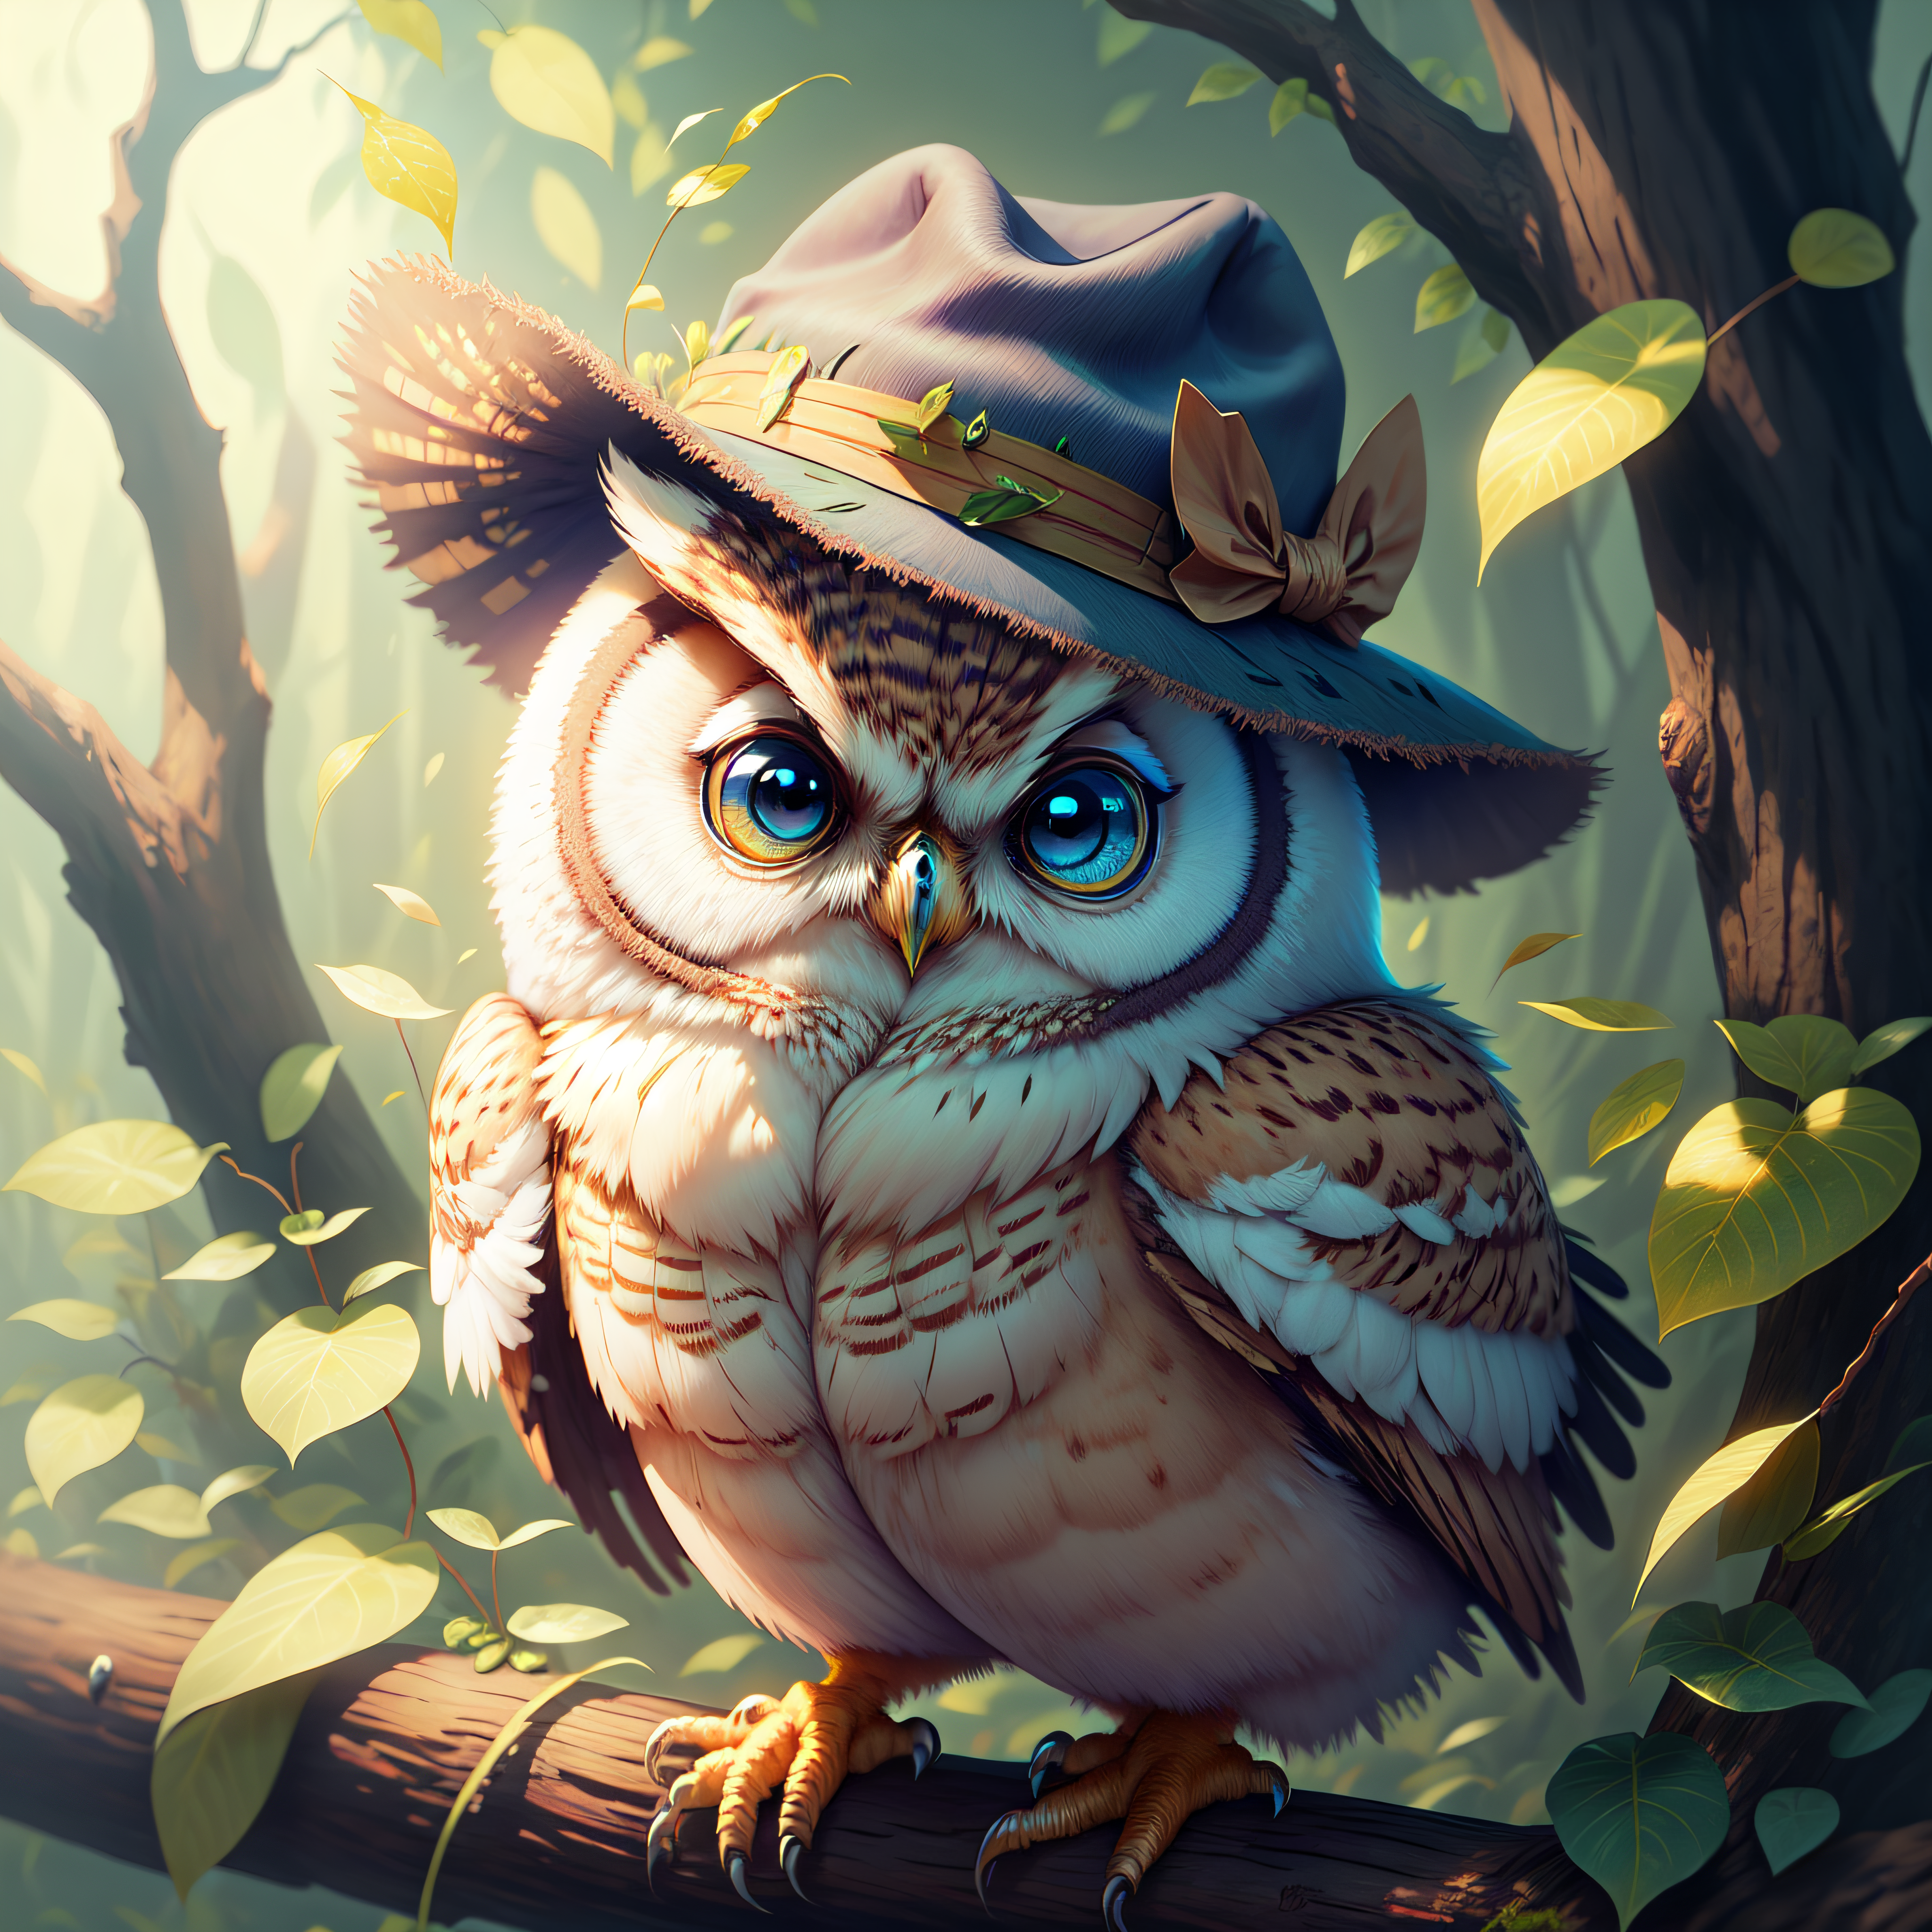 <lora:CuteCreatures:0.8> Cu73Cre4ture owl wearing hat